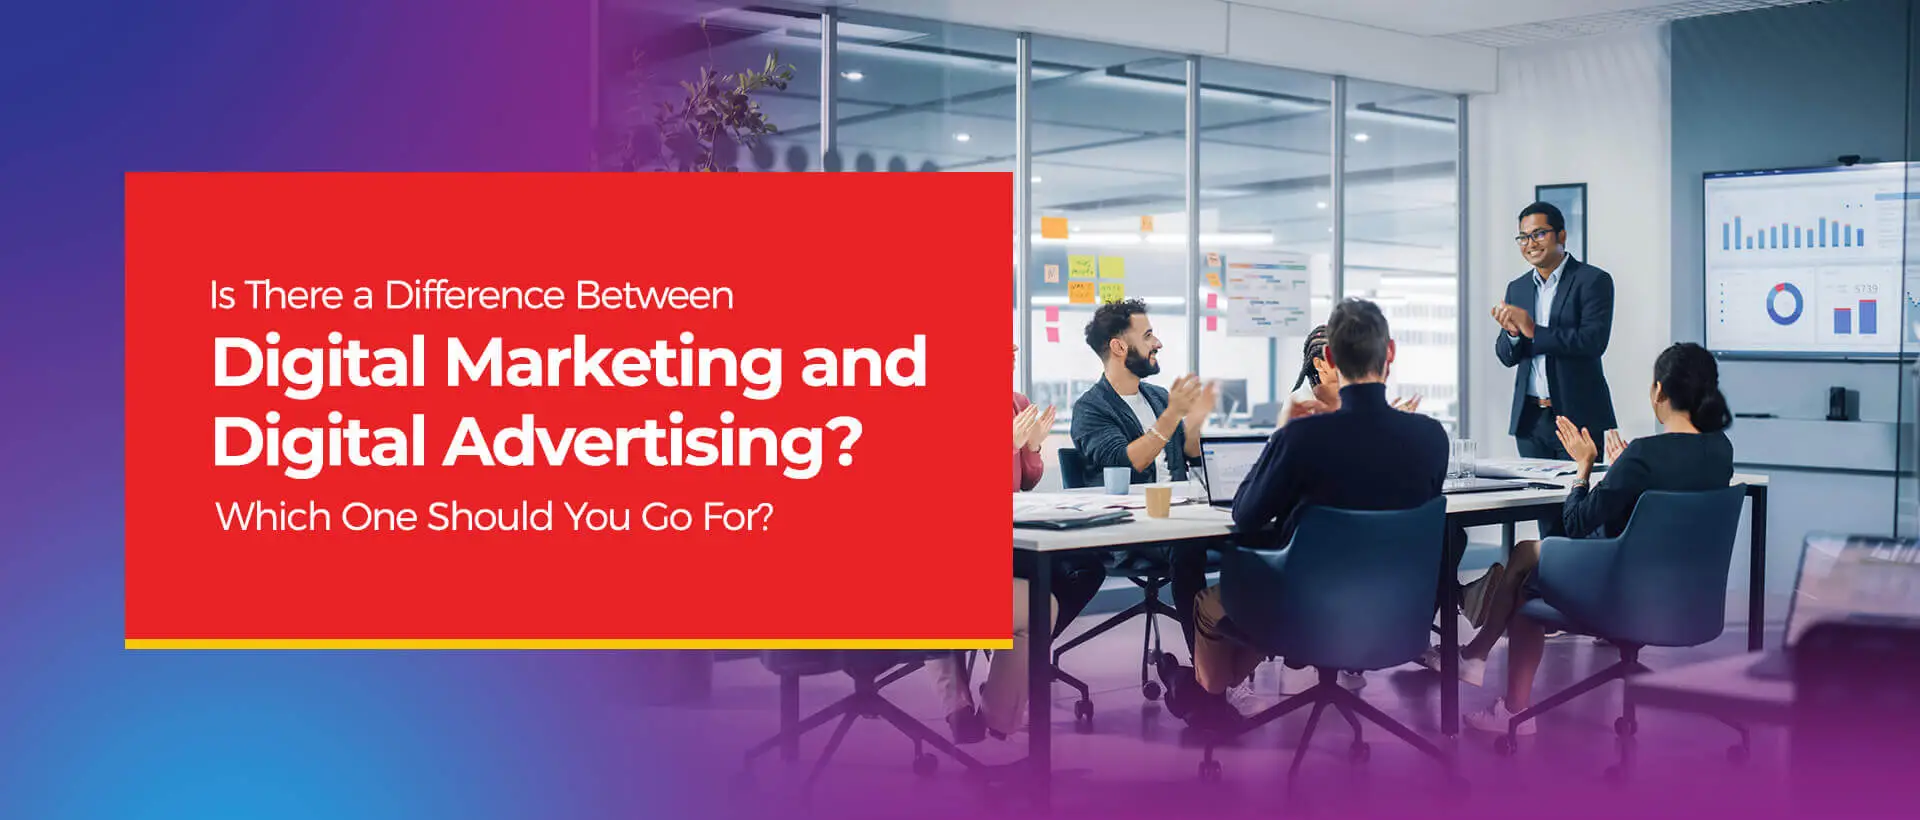 Digital Marketing vs Digital Advertising: Which to Choose?